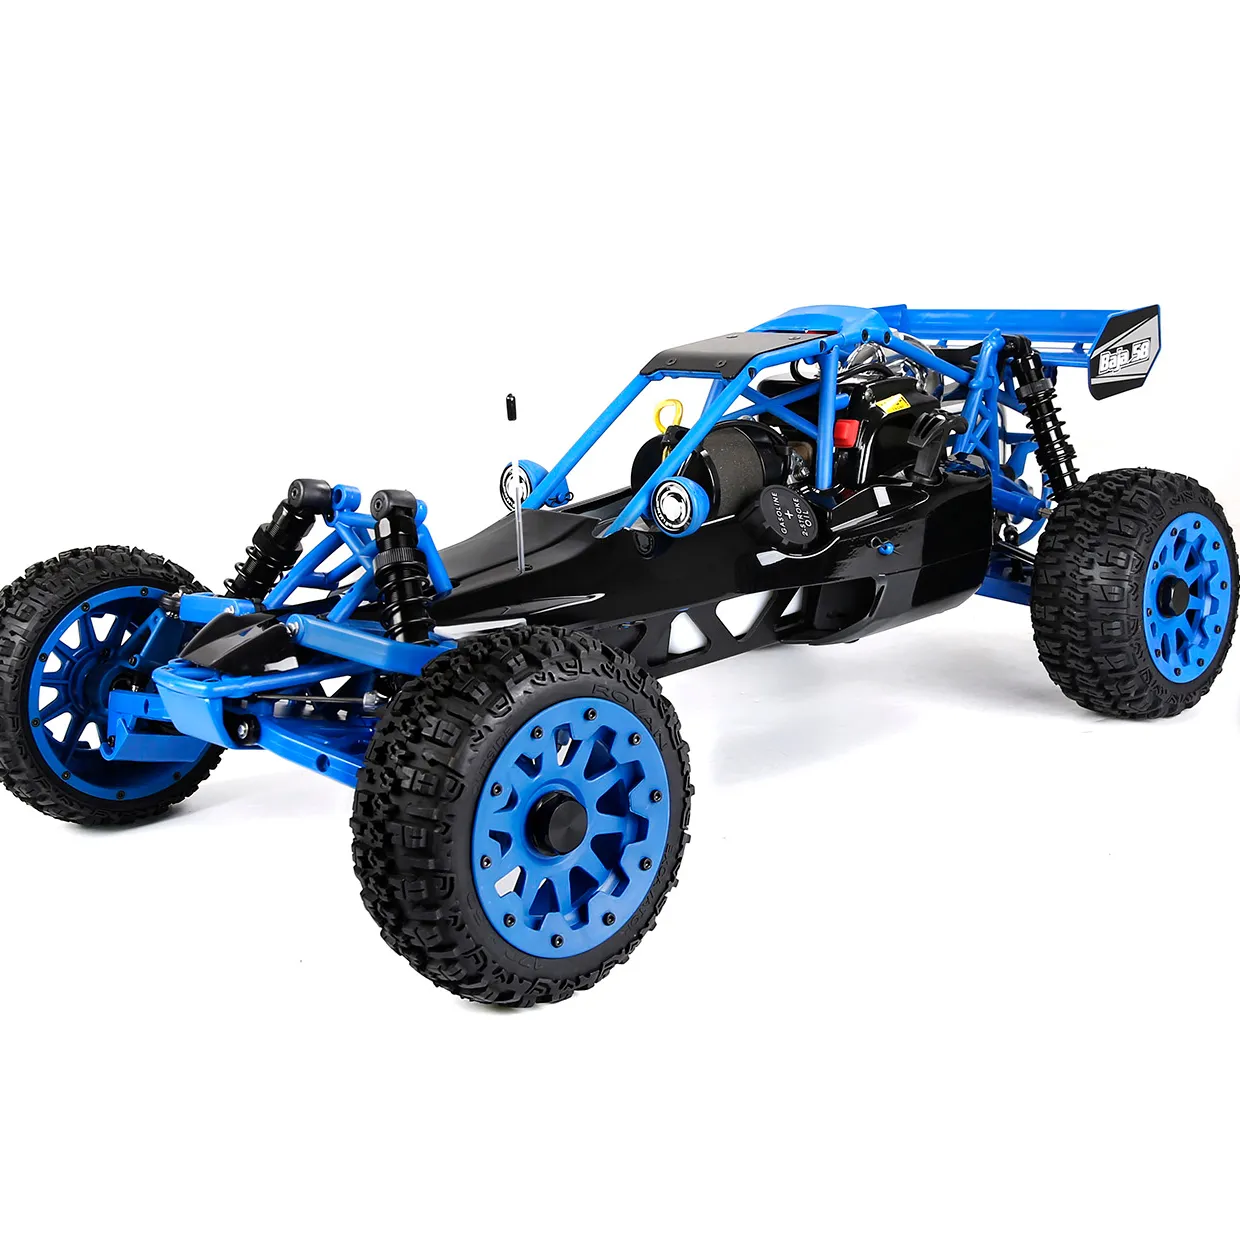 नि: शुल्क वितरण Baha320 ब्लू ड्रैगन सीमित संस्करण 1 / 5 अनुपात आर सी कार उच्च गुणवत्ता 2021 गर्म खिलौना कार